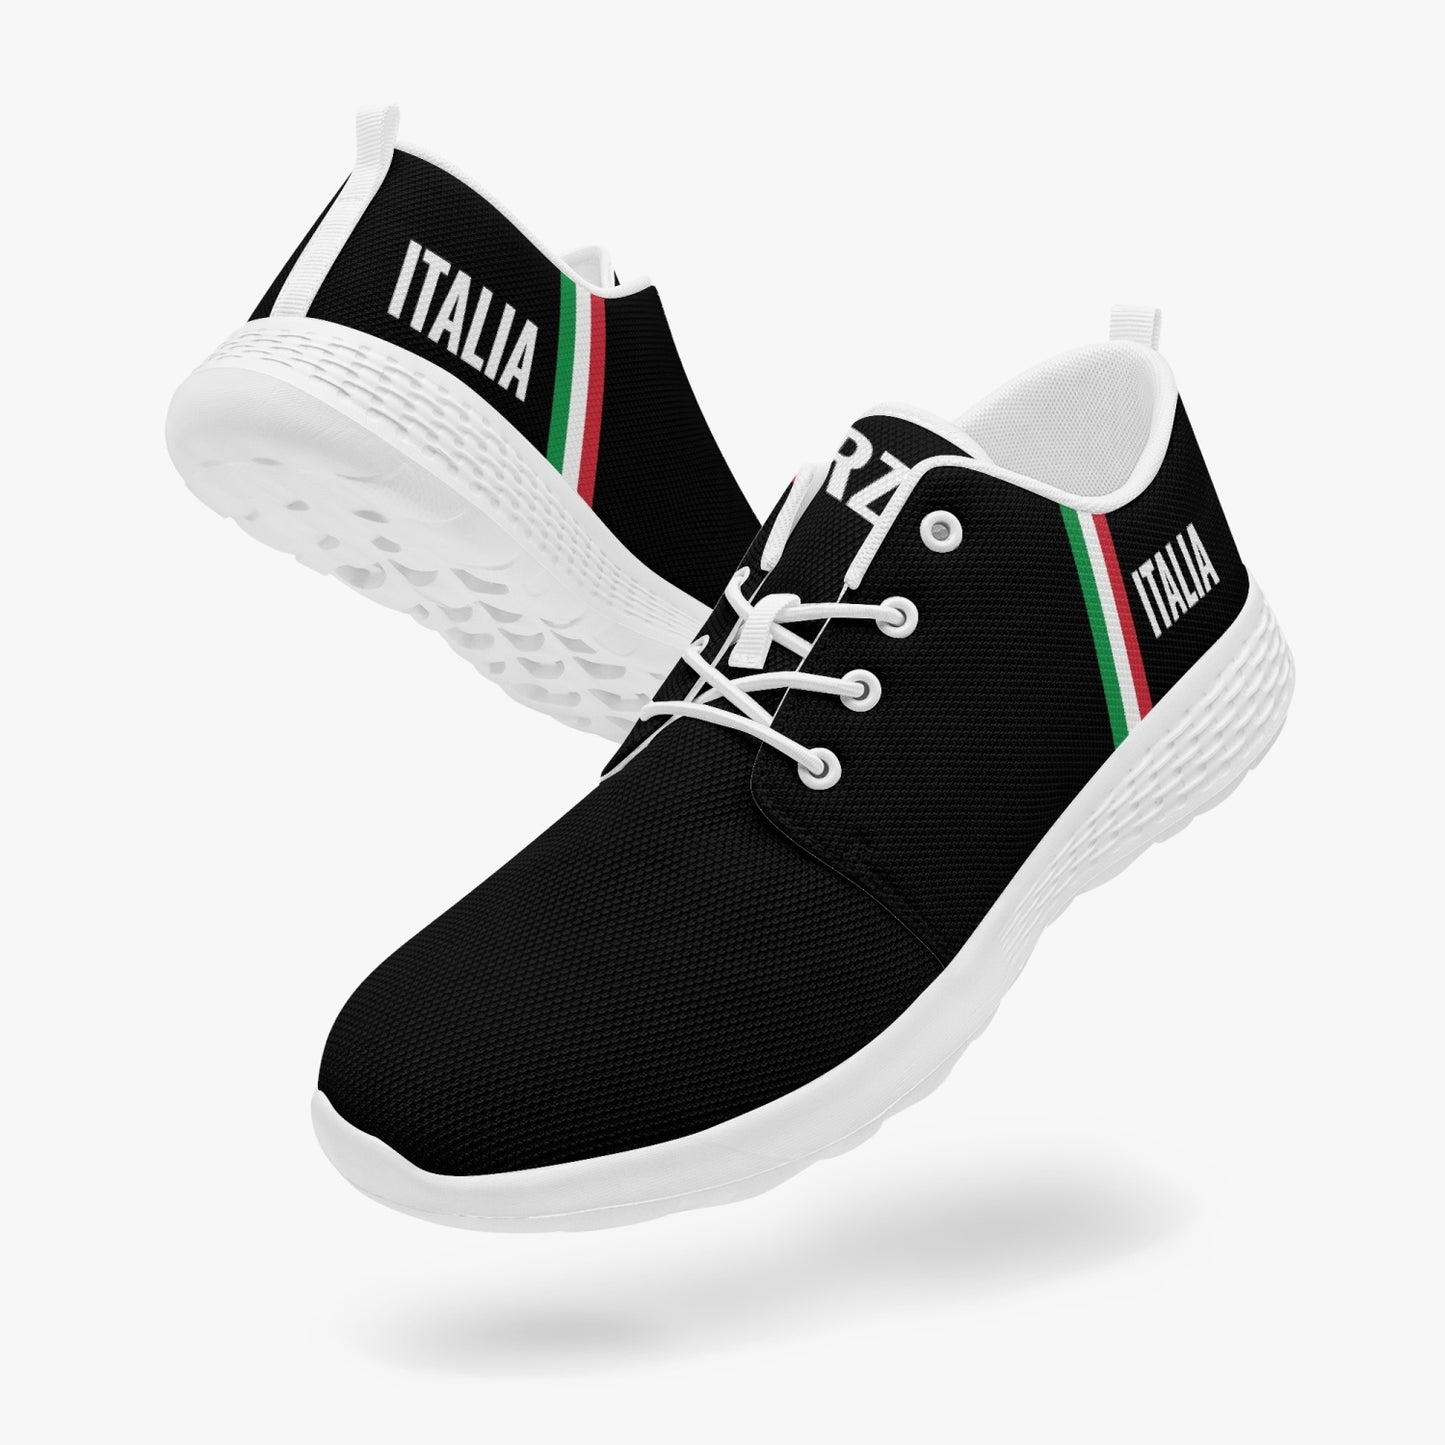 Italy Running Shoes - Forza Italia - Black - men's /women's sizes